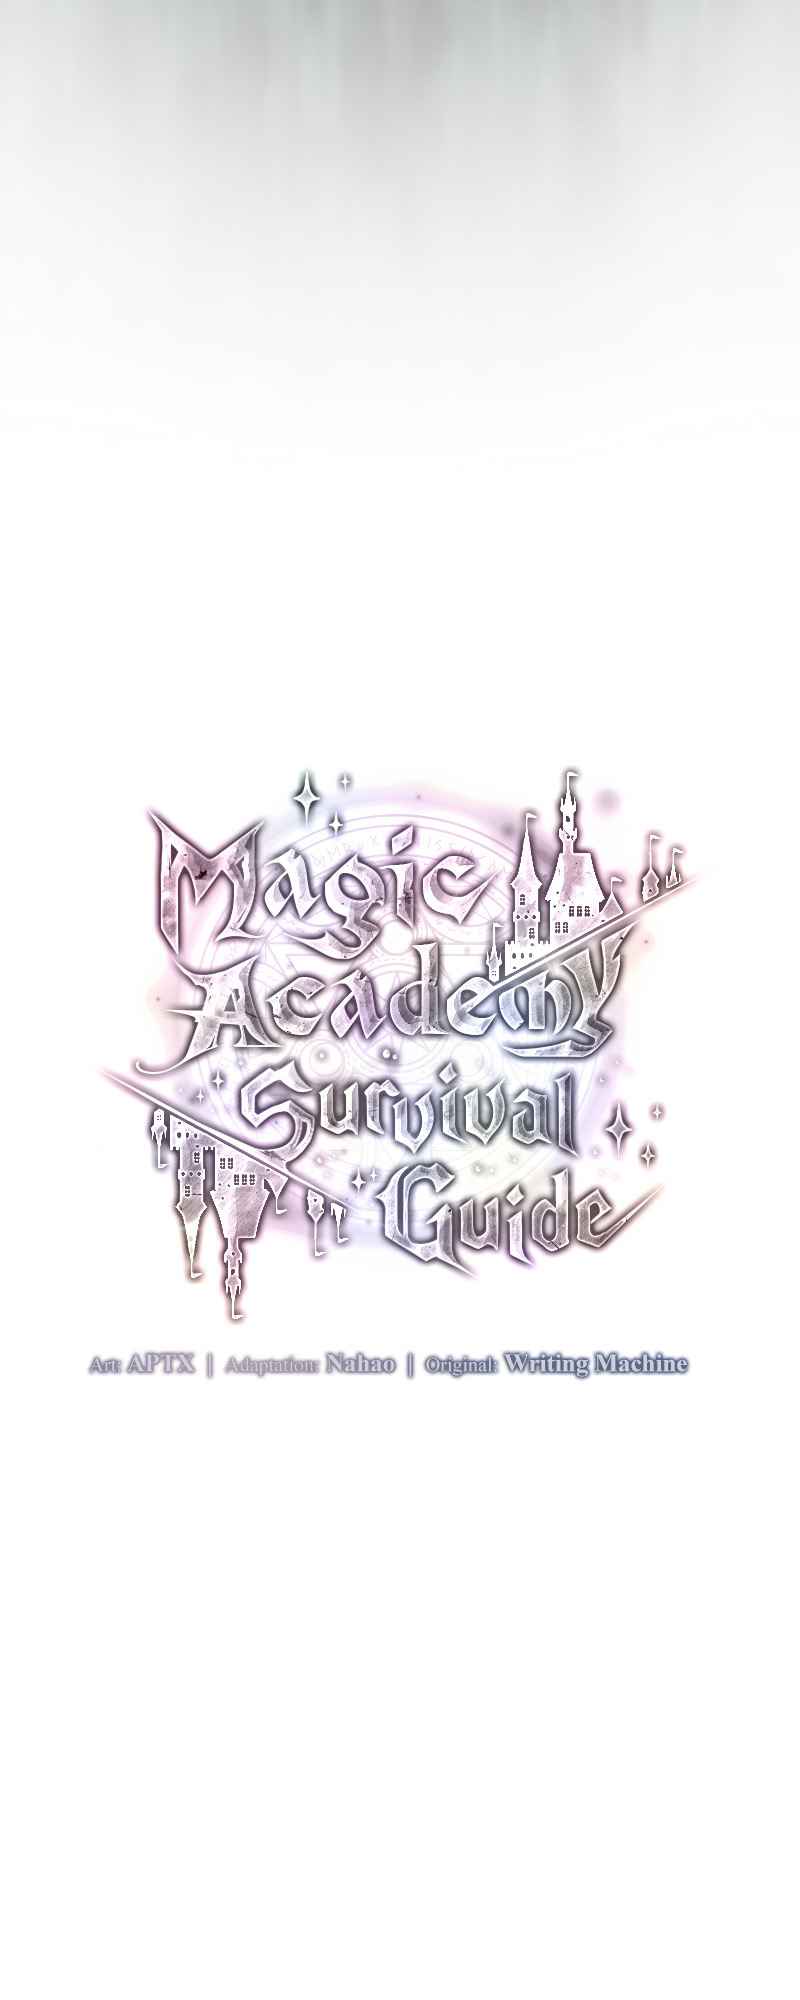 Magic Academy Survival Guide 3